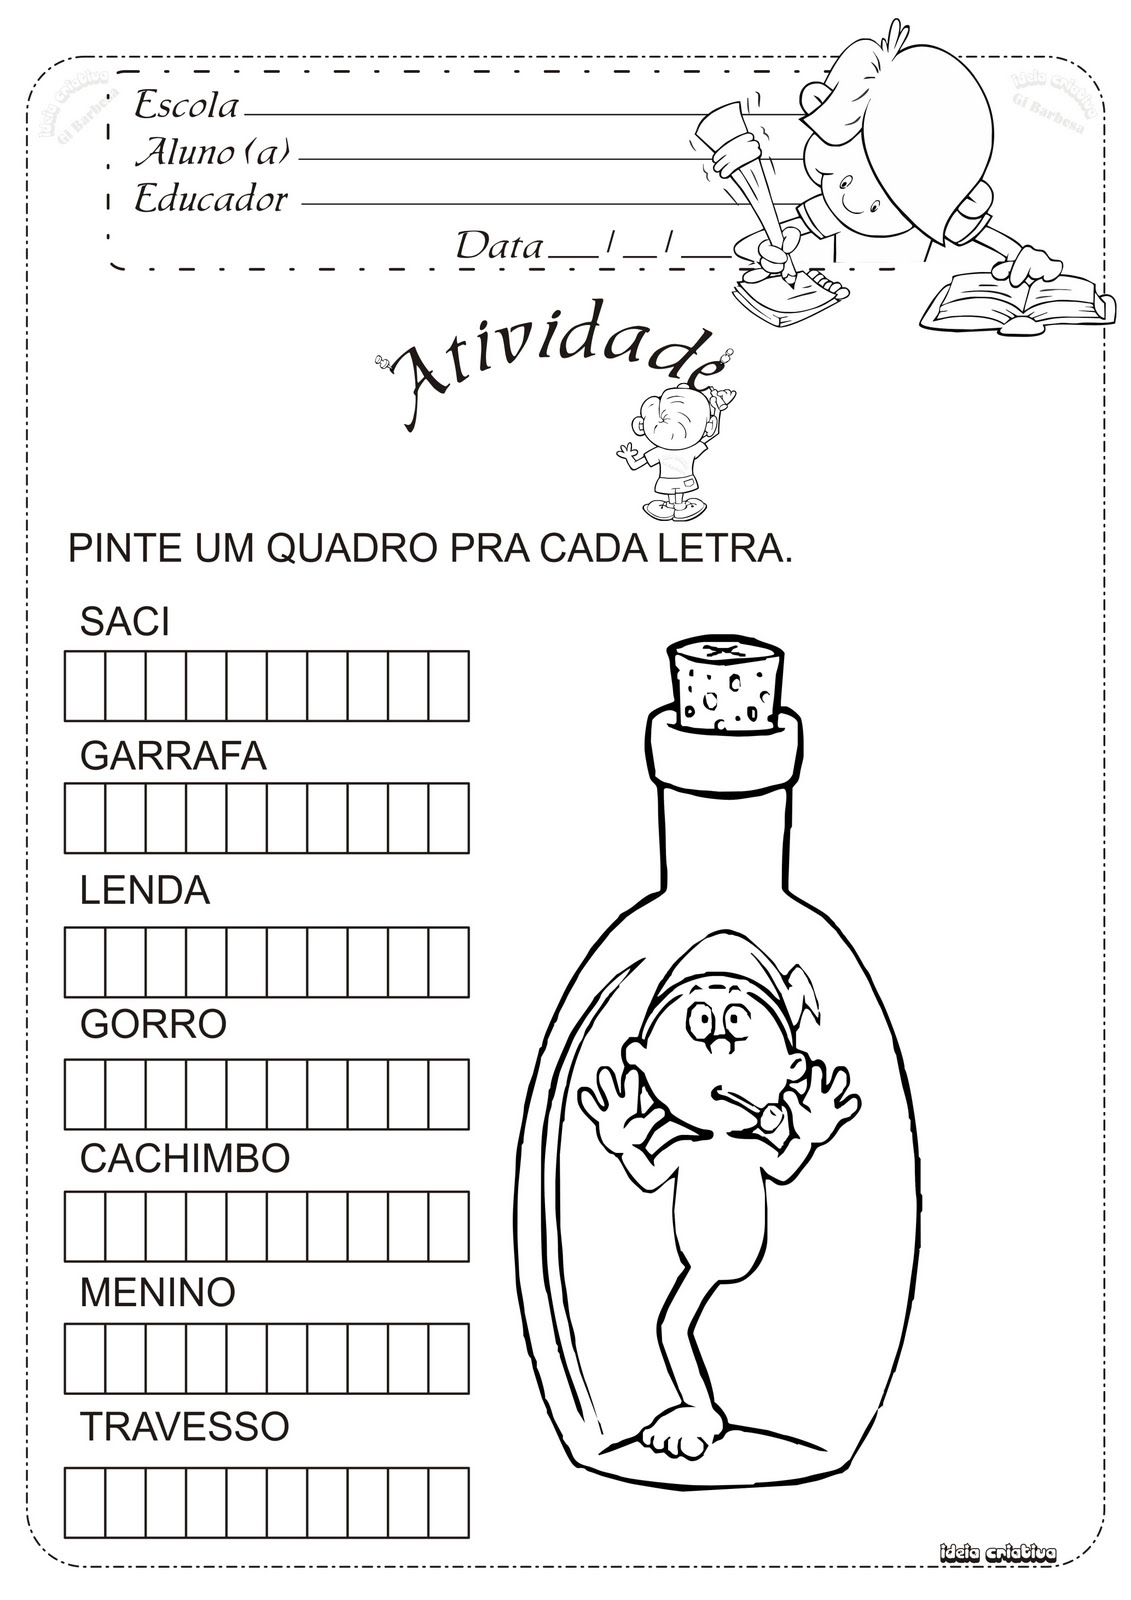 Atividade Folclore Saci na garrafa.